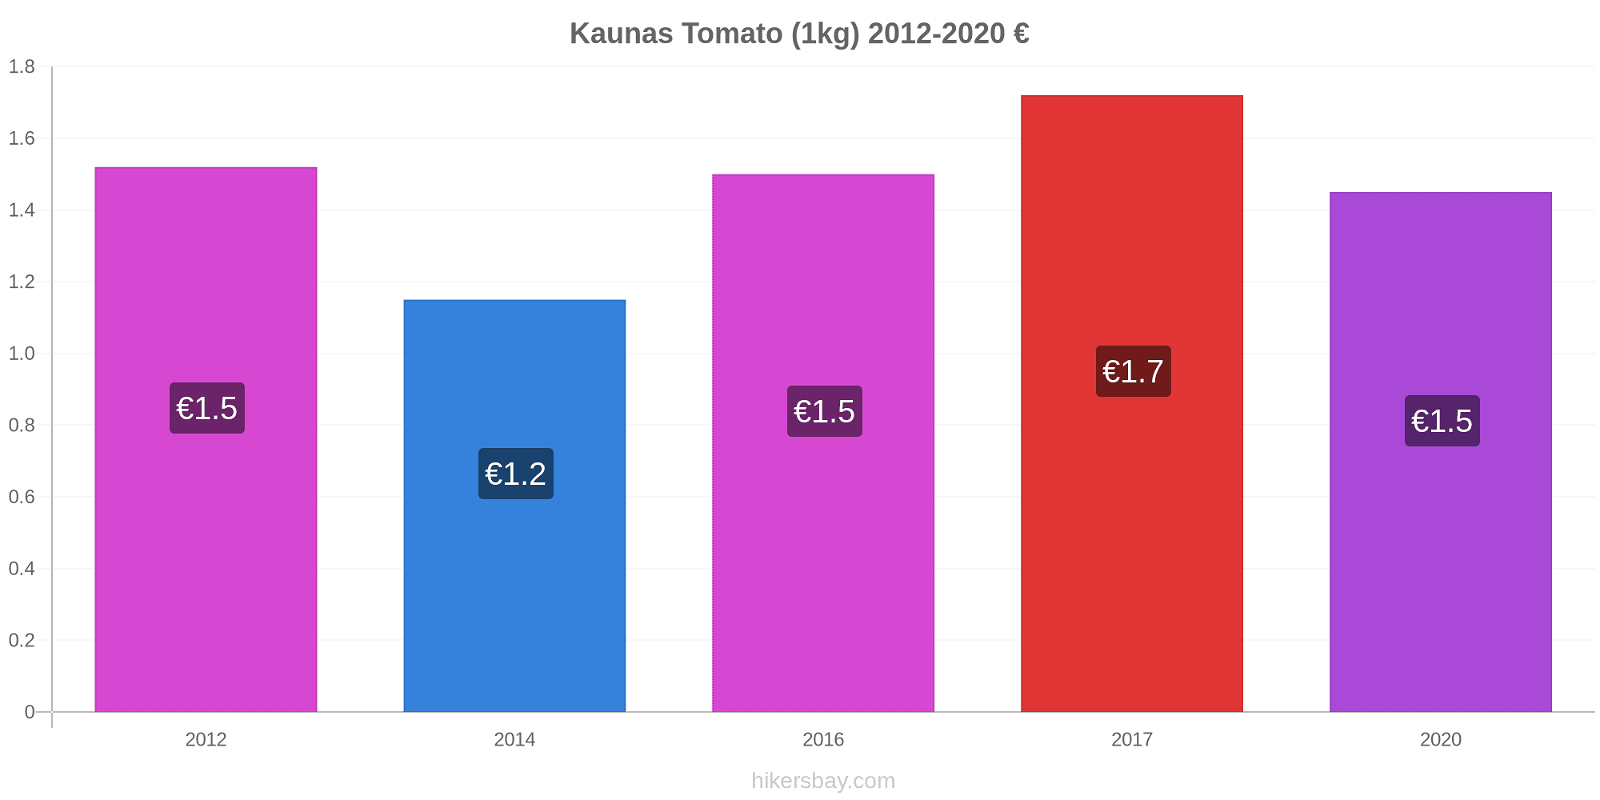 Kaunas price changes Tomato (1kg) hikersbay.com